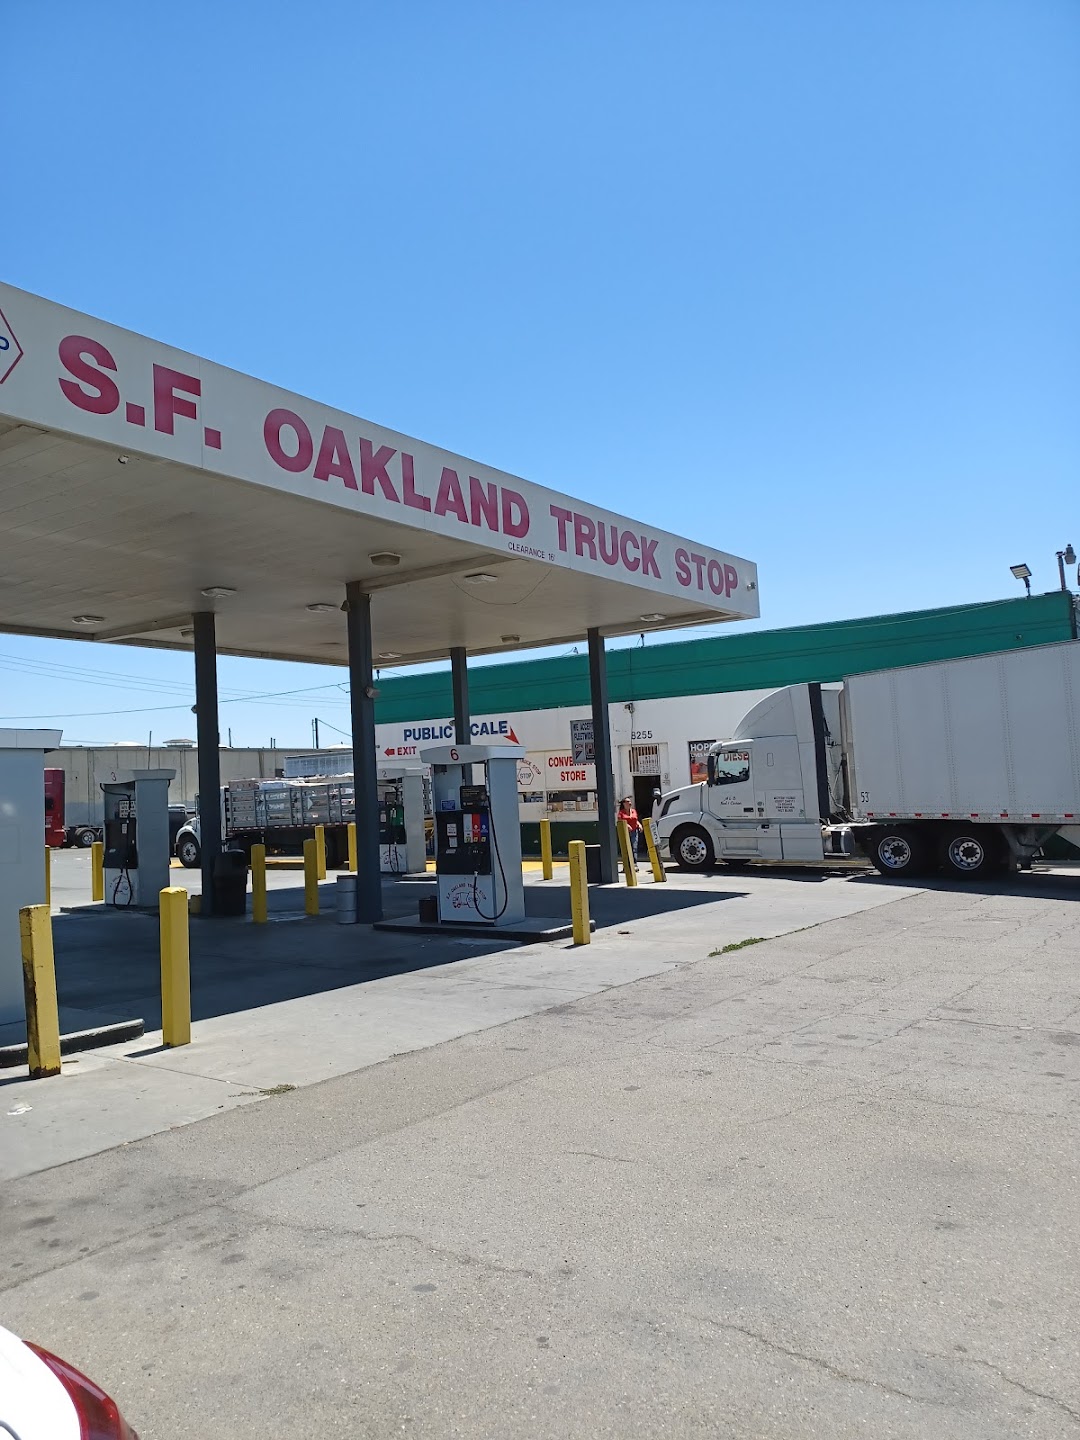 SF Oakland Truck Stop